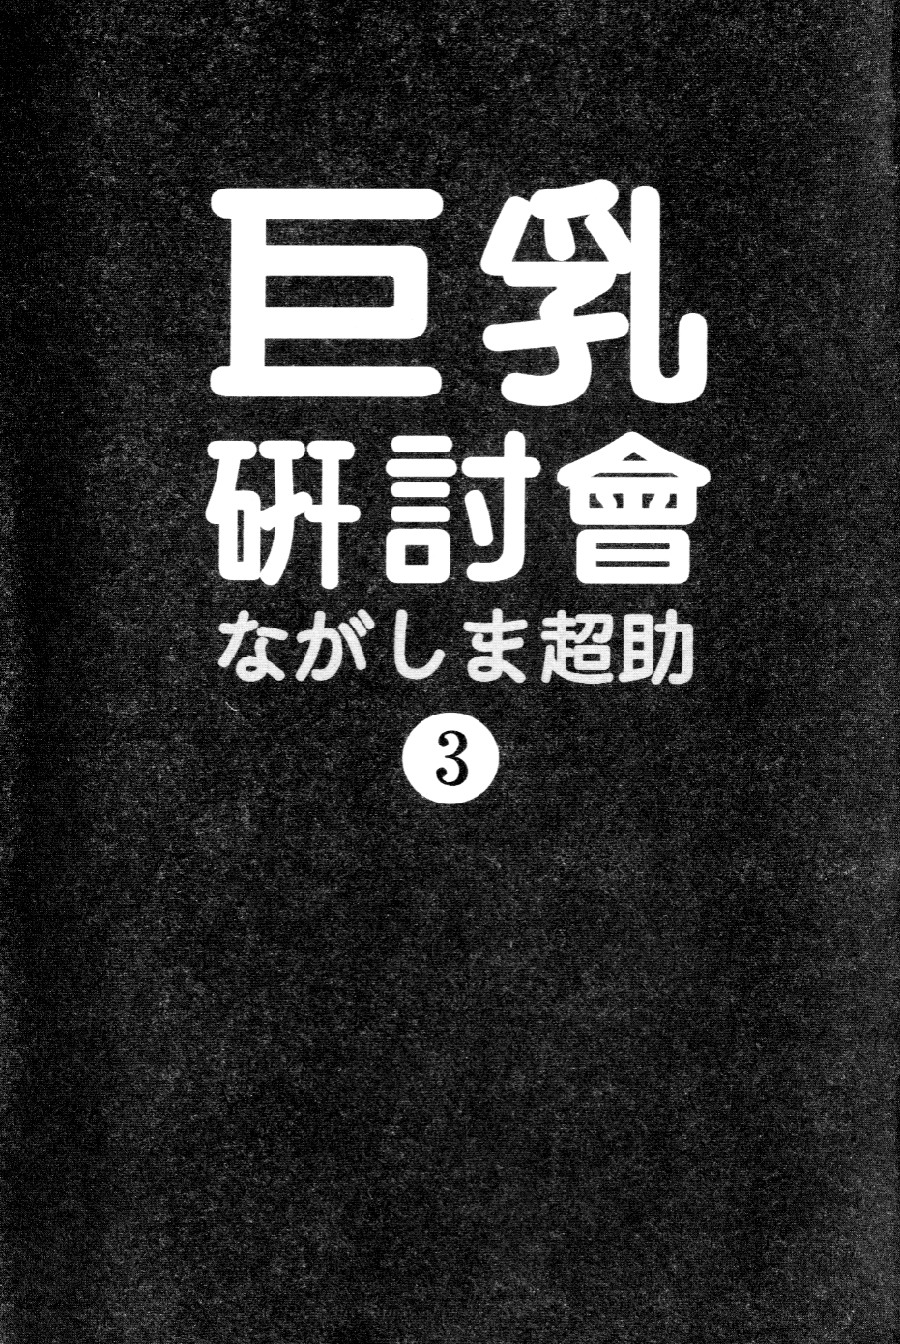 [Nagashima Chosuke] Pururun Seminar 3 (Chinese) 